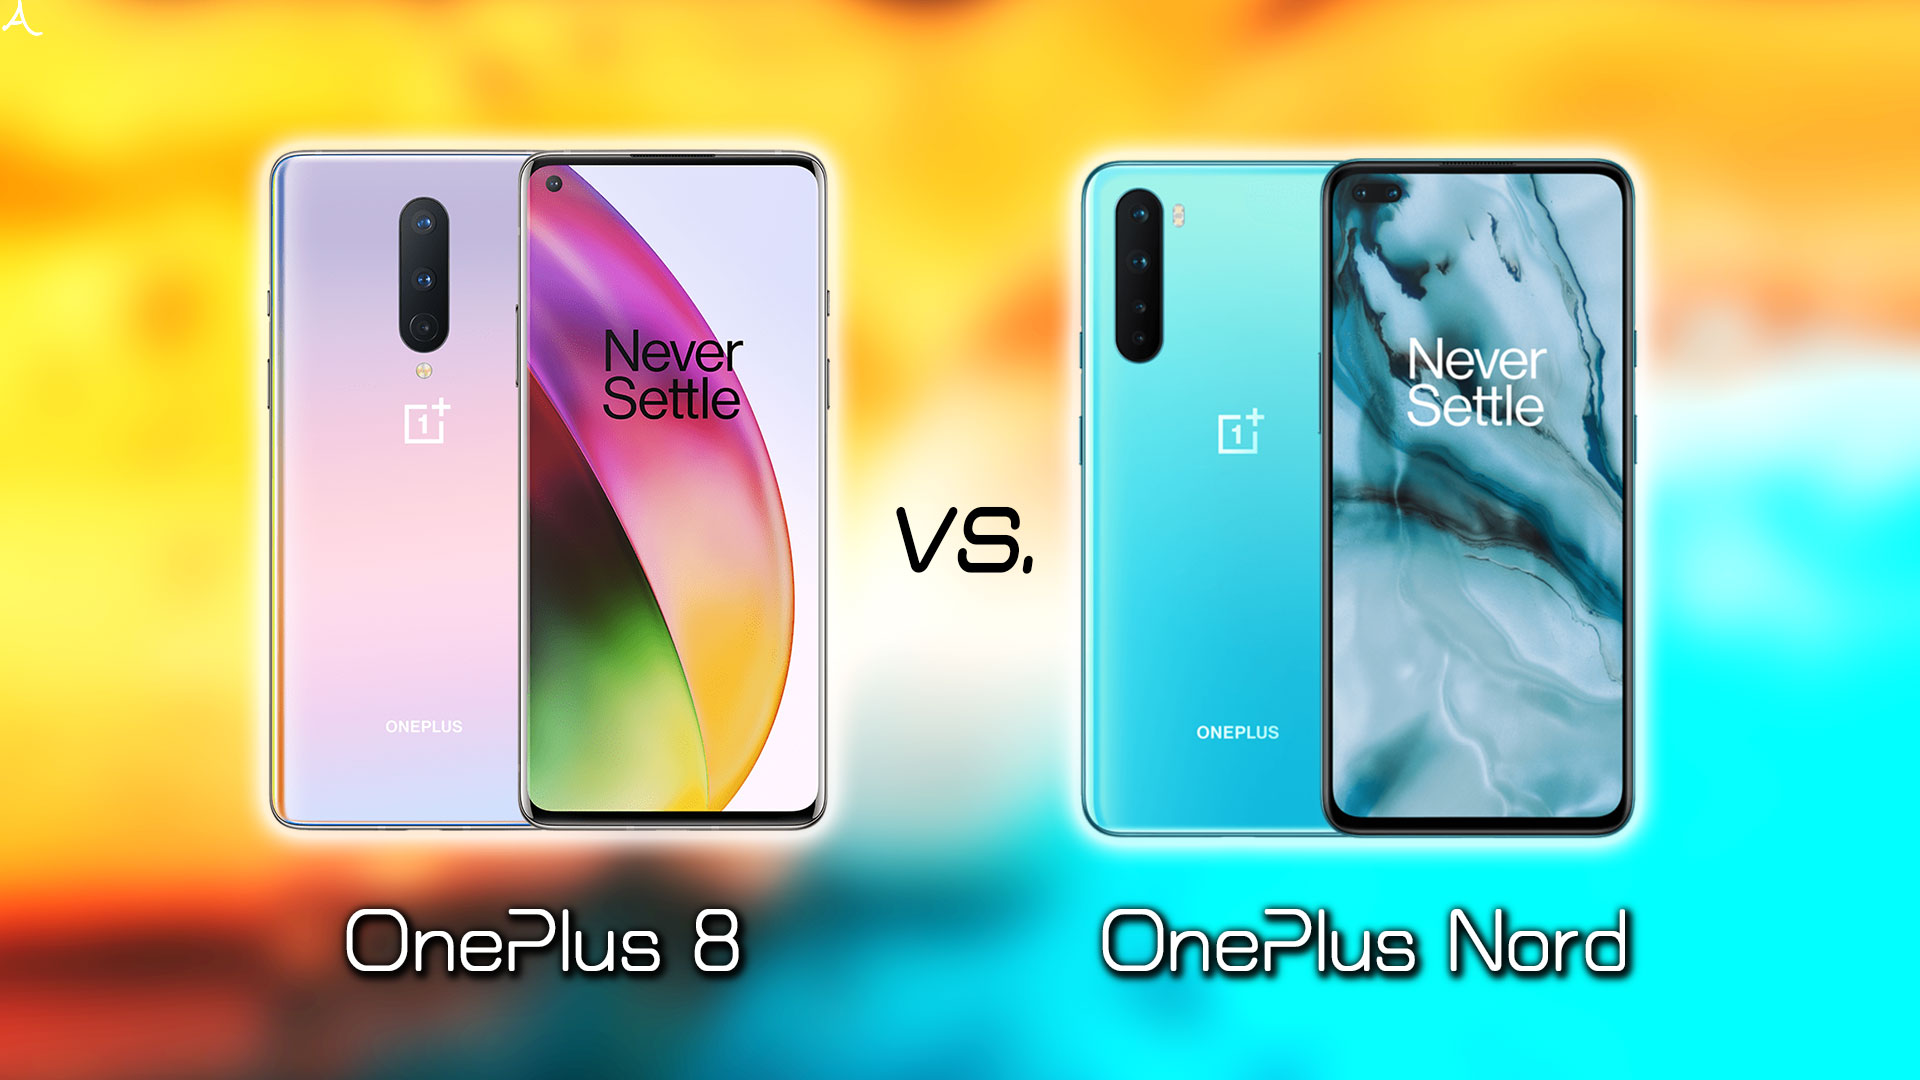 ｢OnePlus 8｣と｢OnePlus Nord｣のスペックや違いを細かく比較